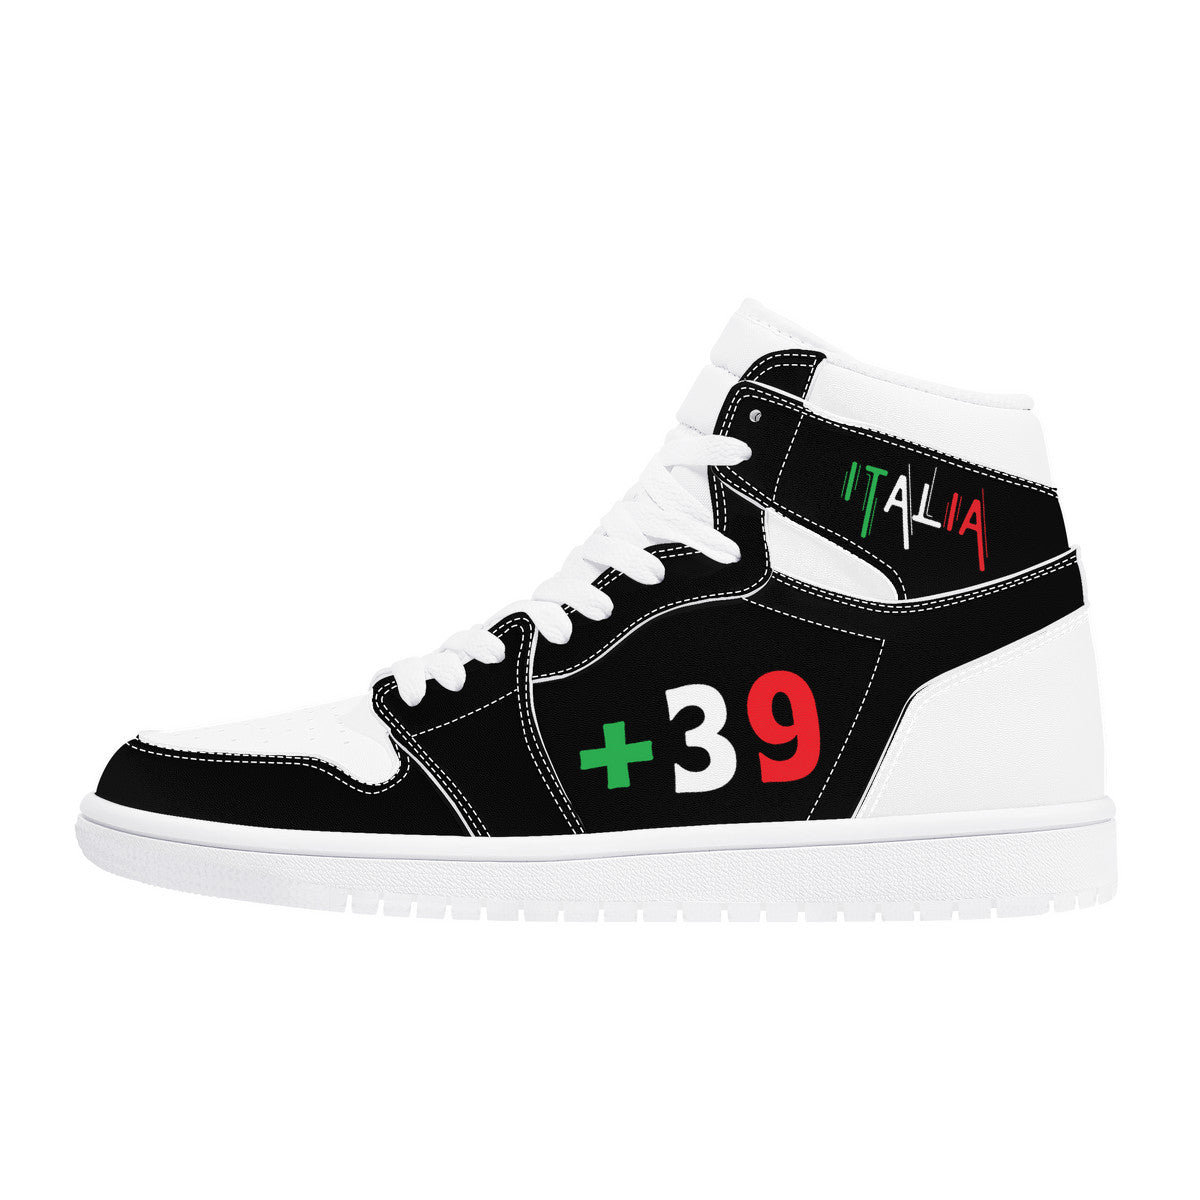 Italia +39 High Top Leather Sneaker